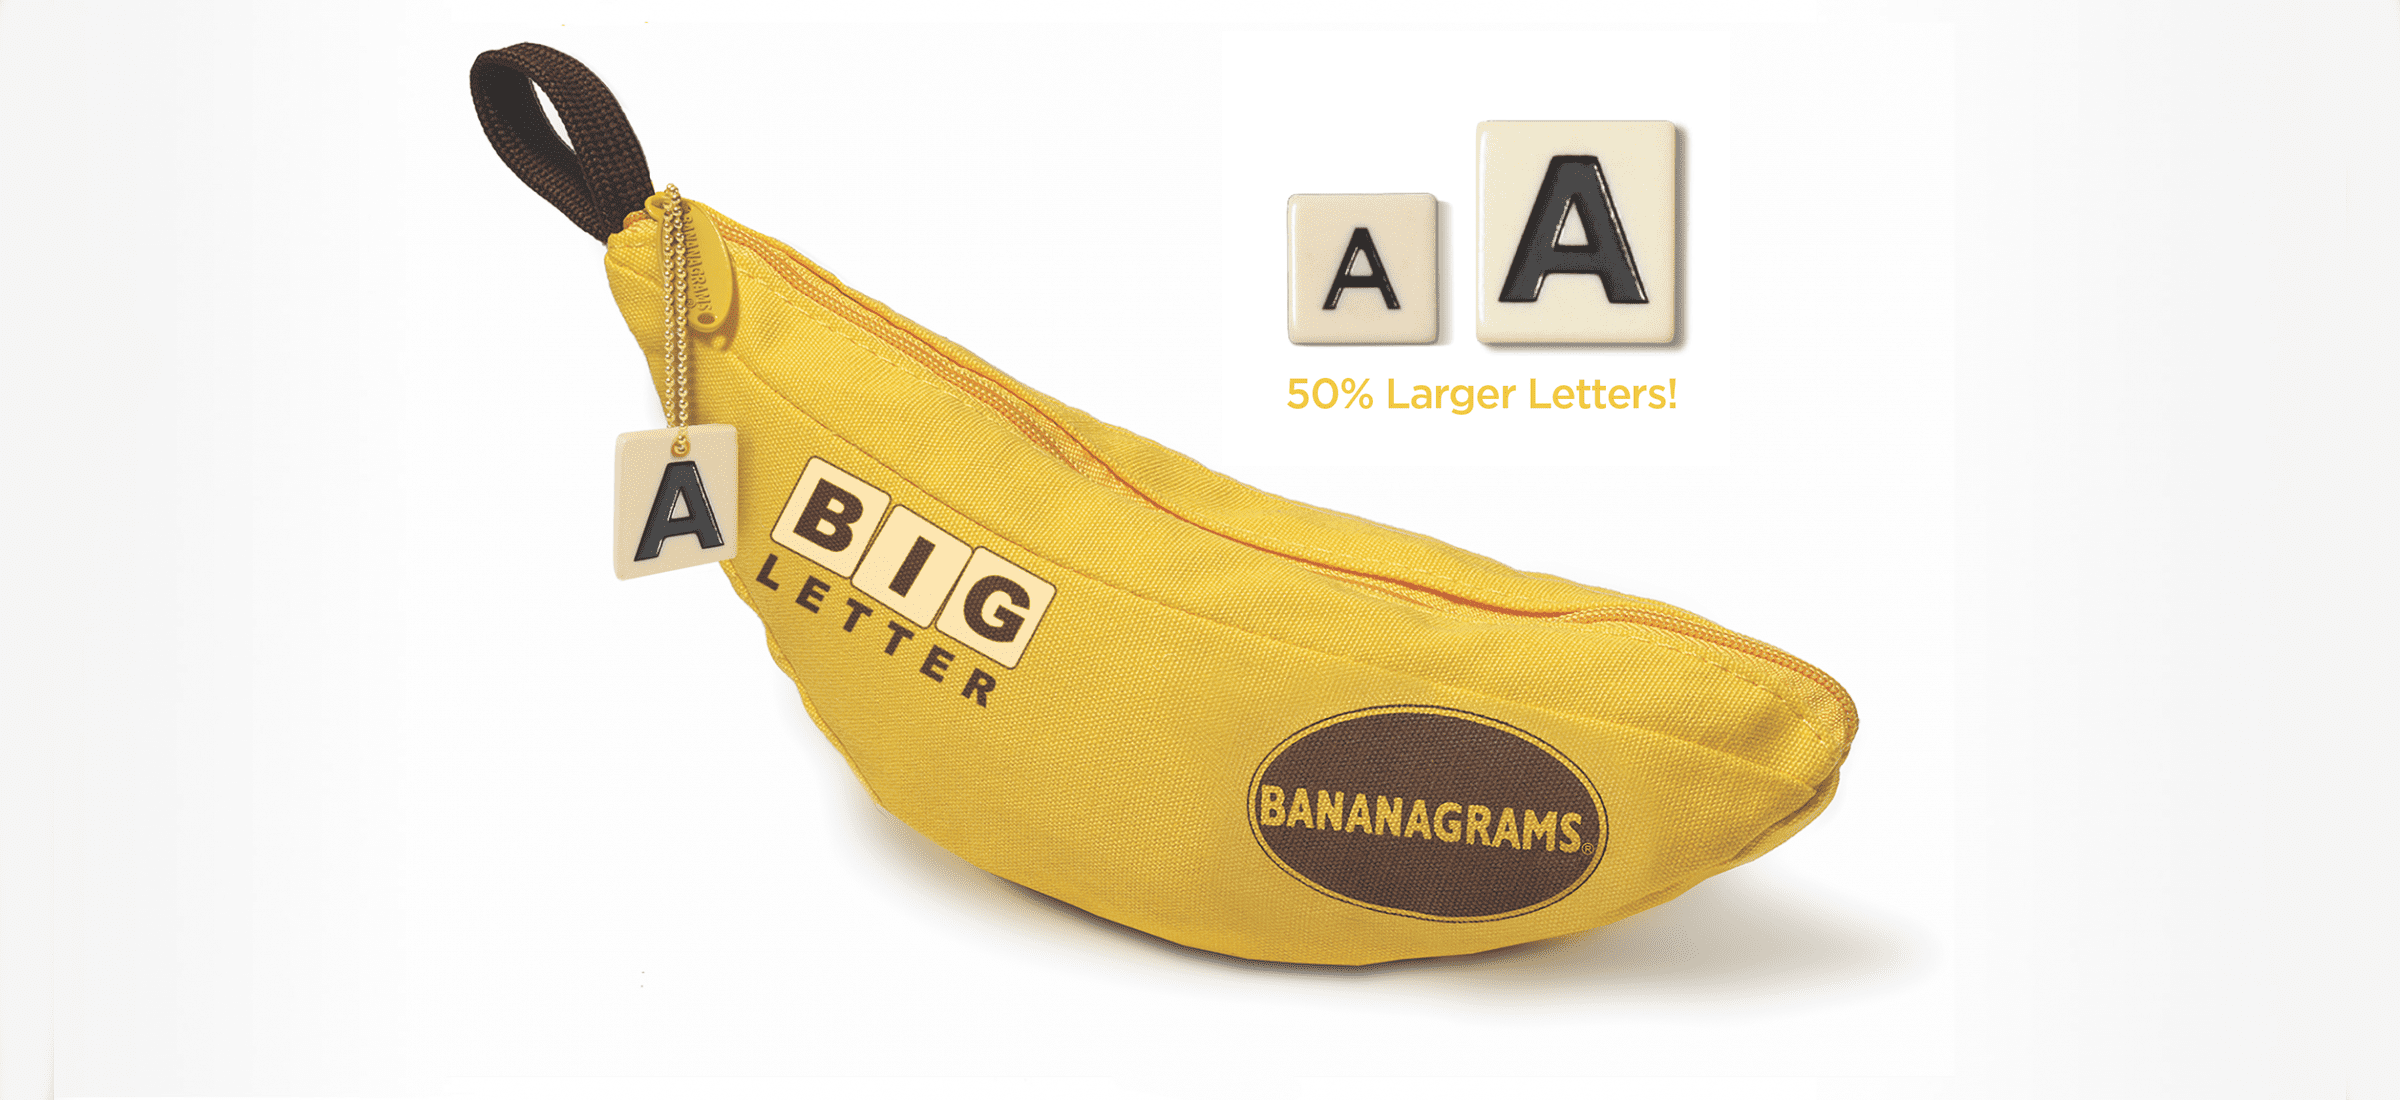 Big Letter Bananagrams Game for Low Vision